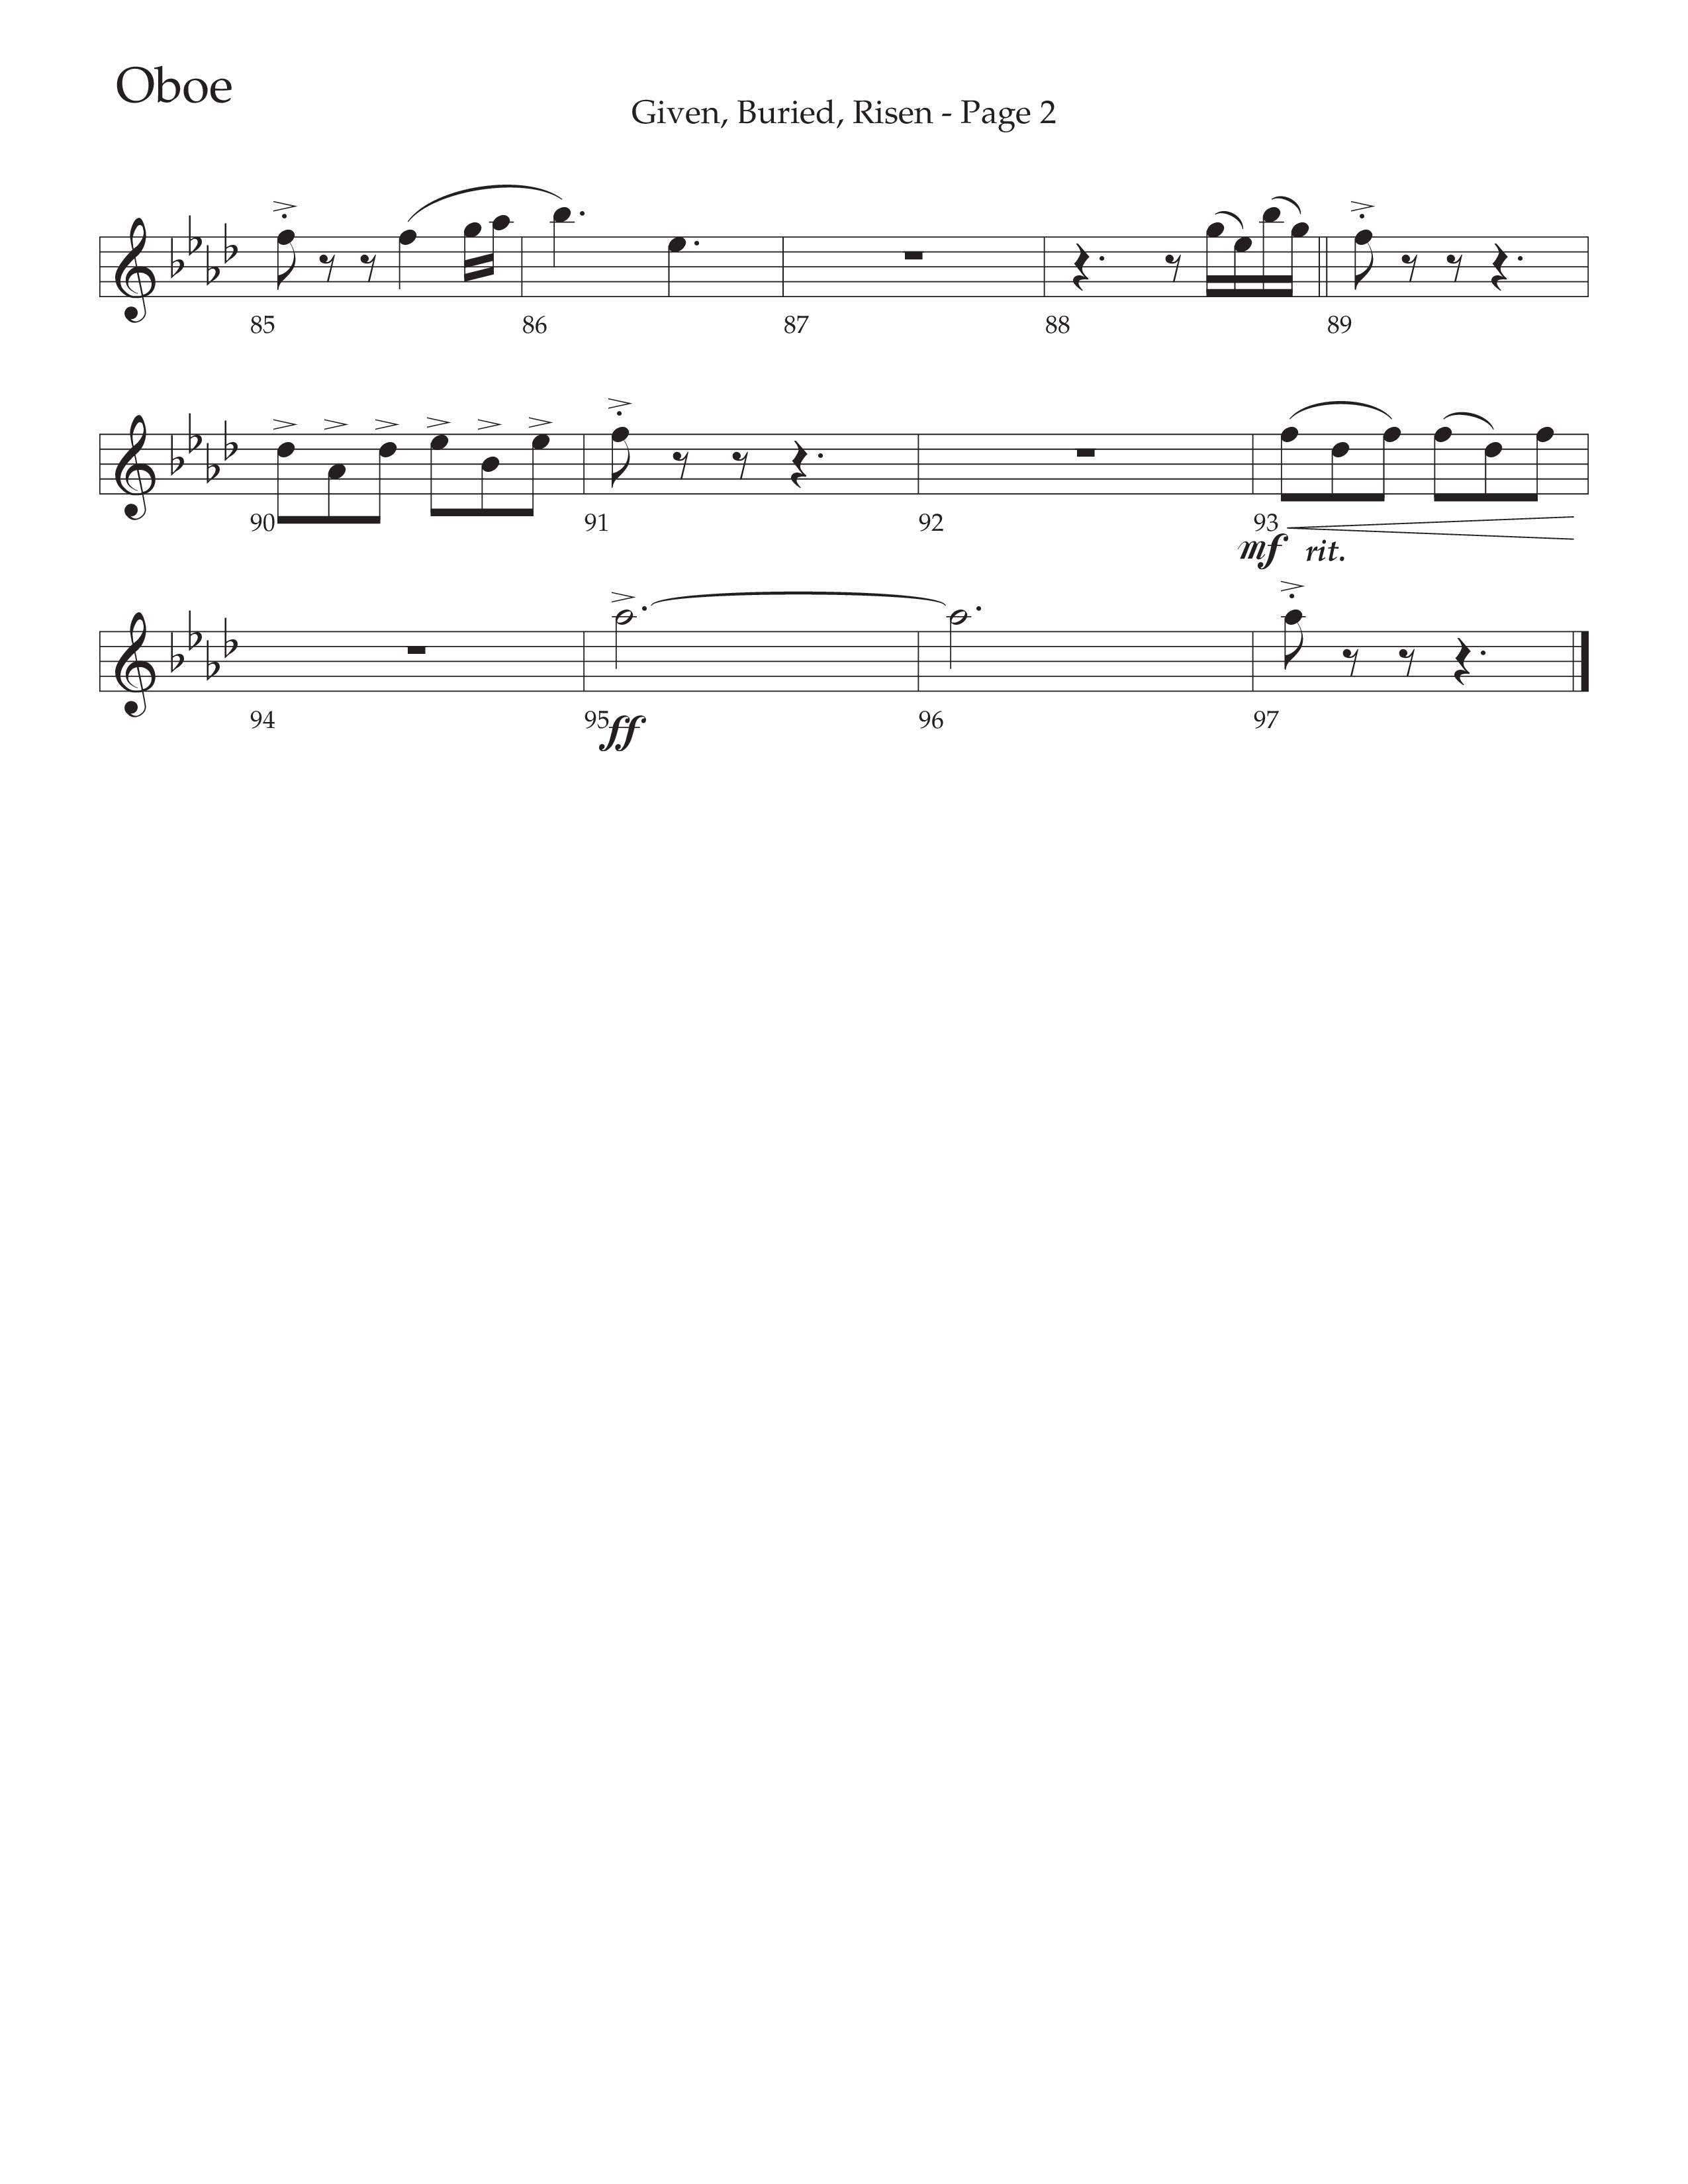 Given Buried Risen (Choral Anthem SATB) Oboe (Daywind Worship / Arr. Phil Nitz)